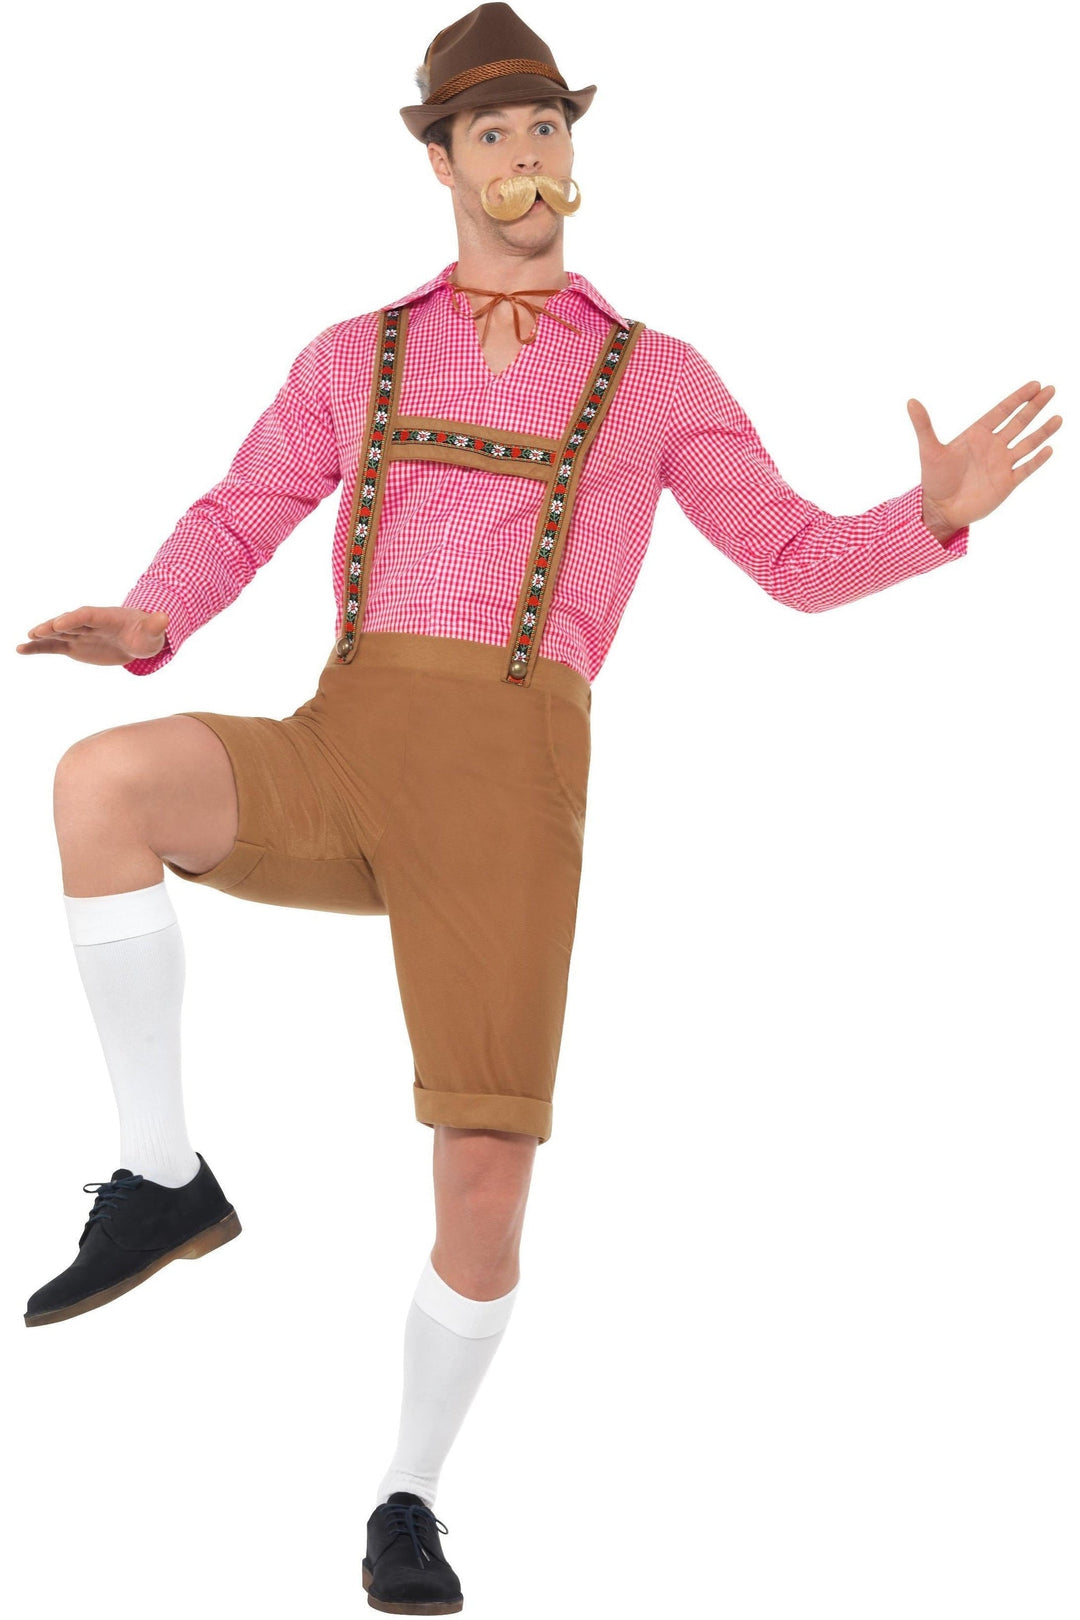 Mr. Bavarian Costume